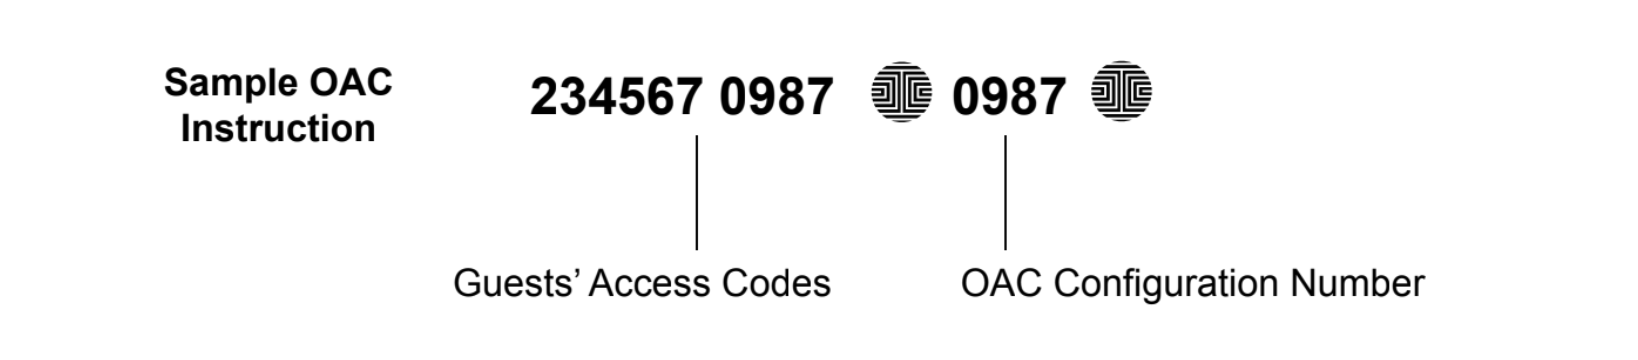 Sample Offline Access Code OAC